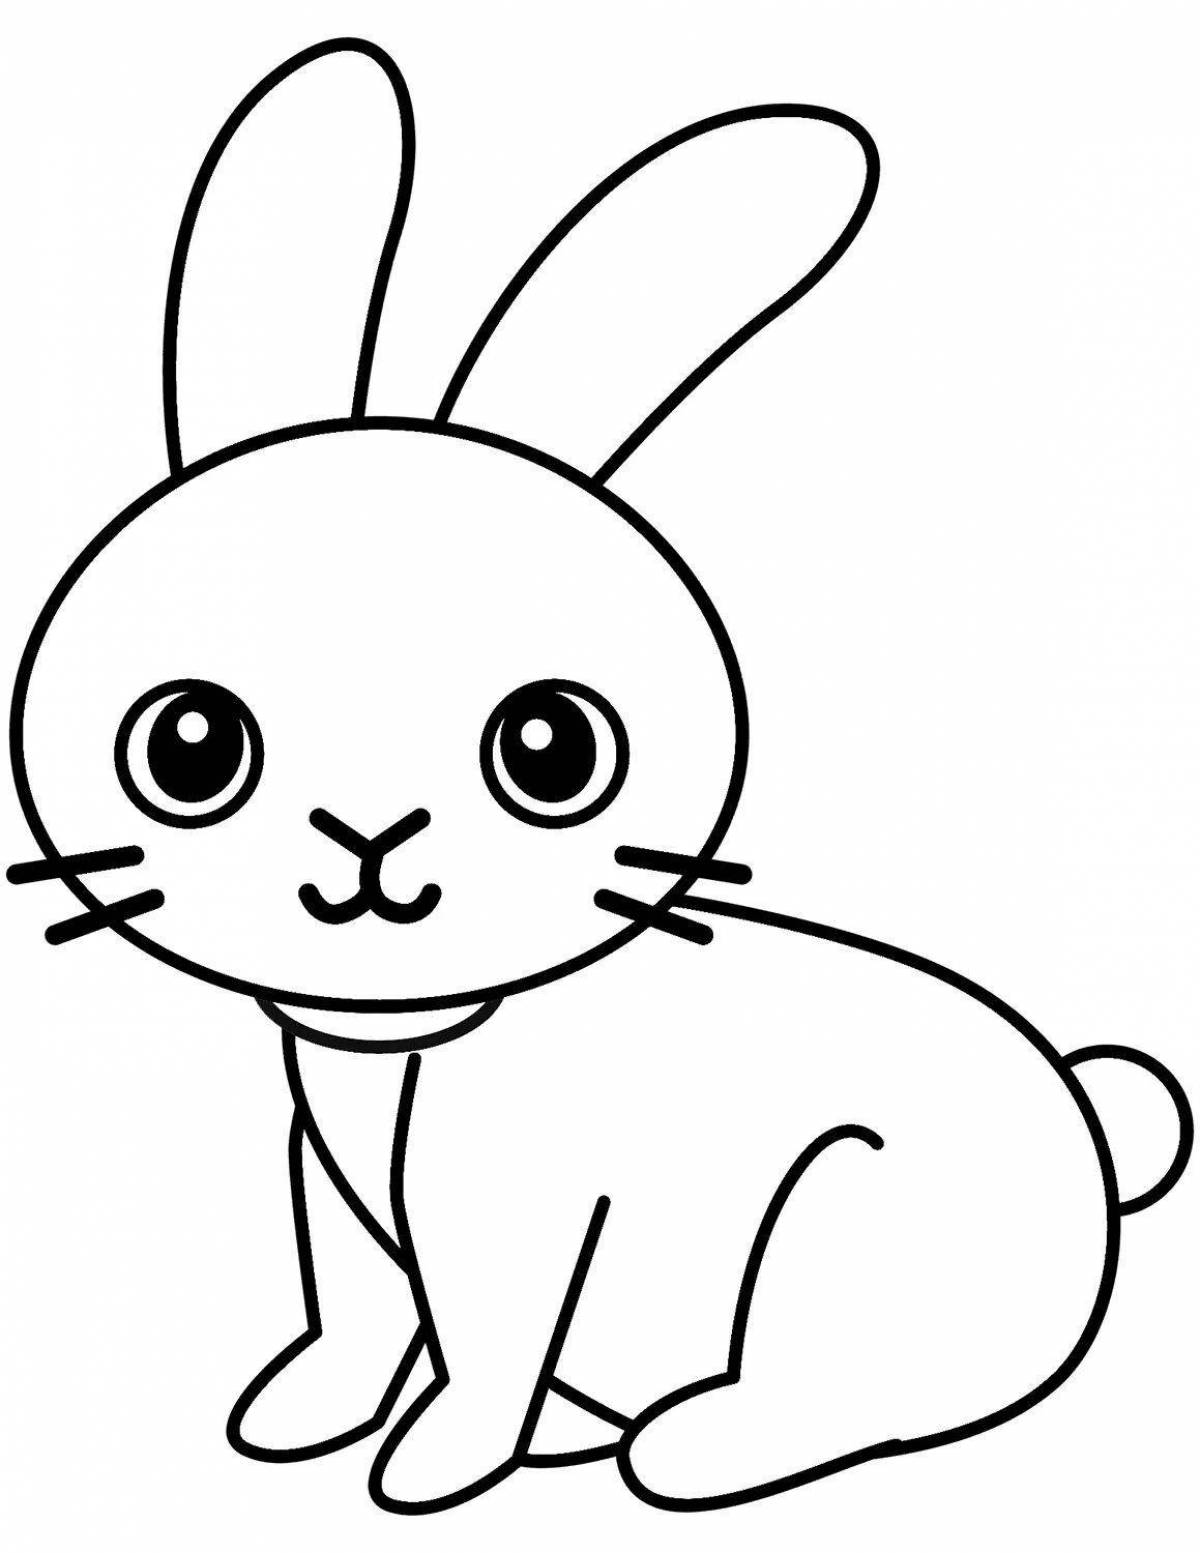 Cosy rabbit coloring page